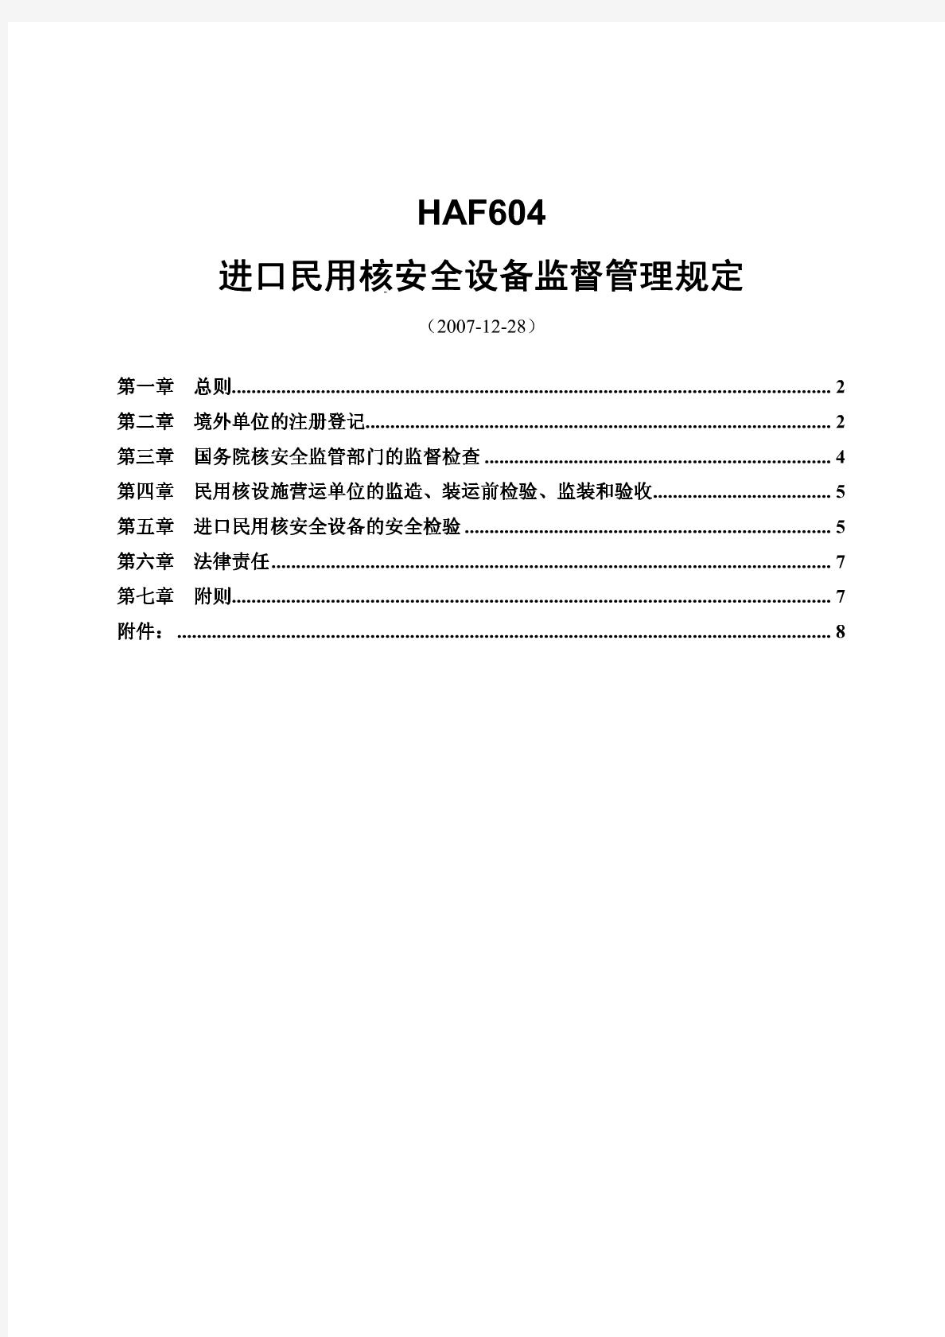 HAF604进口民用核安全设备监督管理规定2007